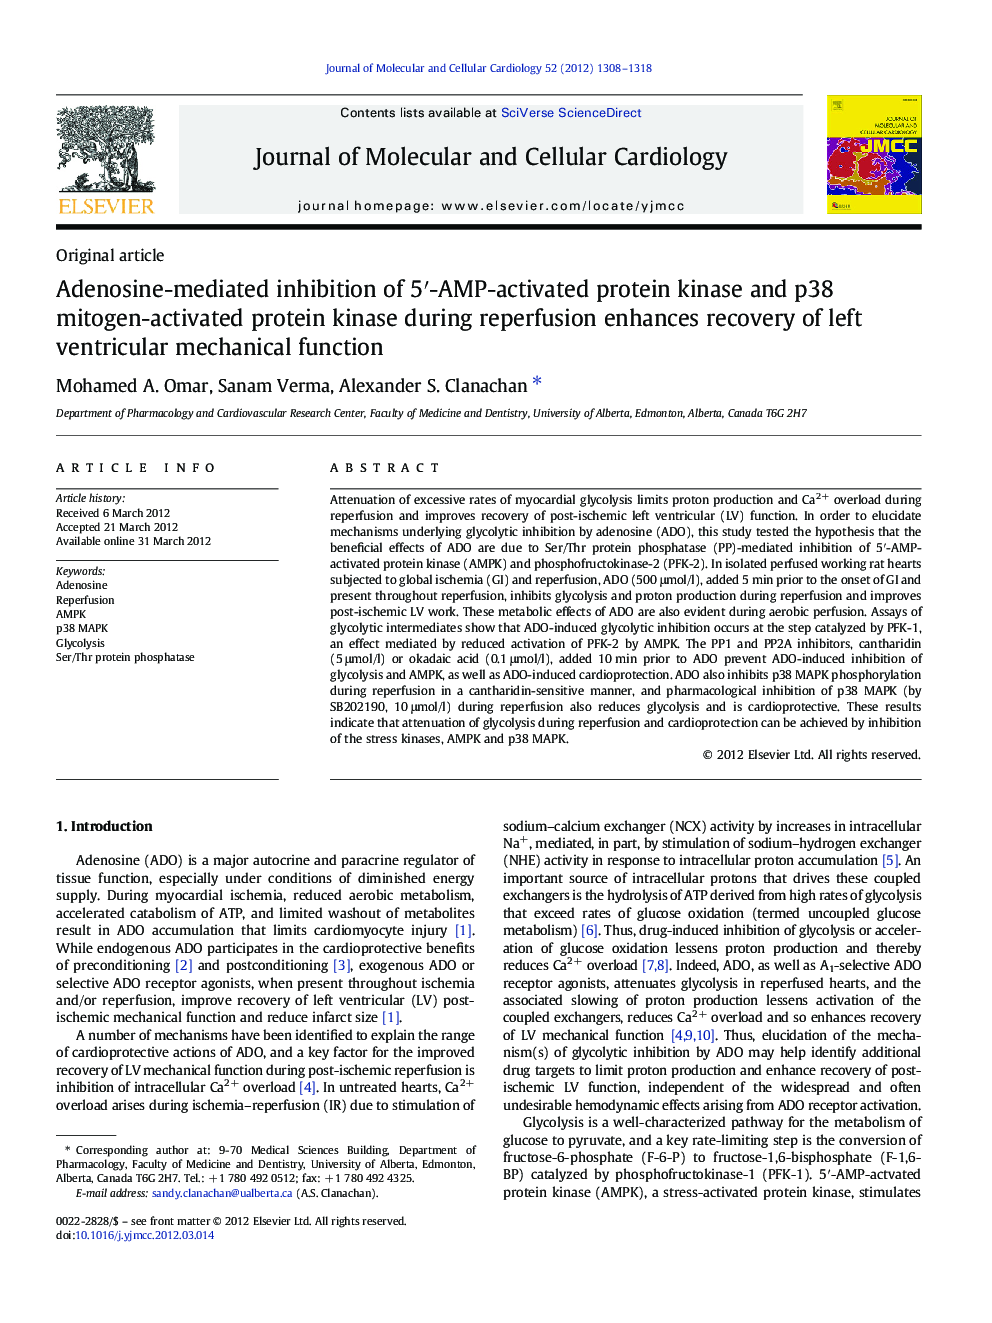 Adenosine-mediated inhibition of 5â²-AMP-activated protein kinase and p38 mitogen-activated protein kinase during reperfusion enhances recovery of left ventricular mechanical function